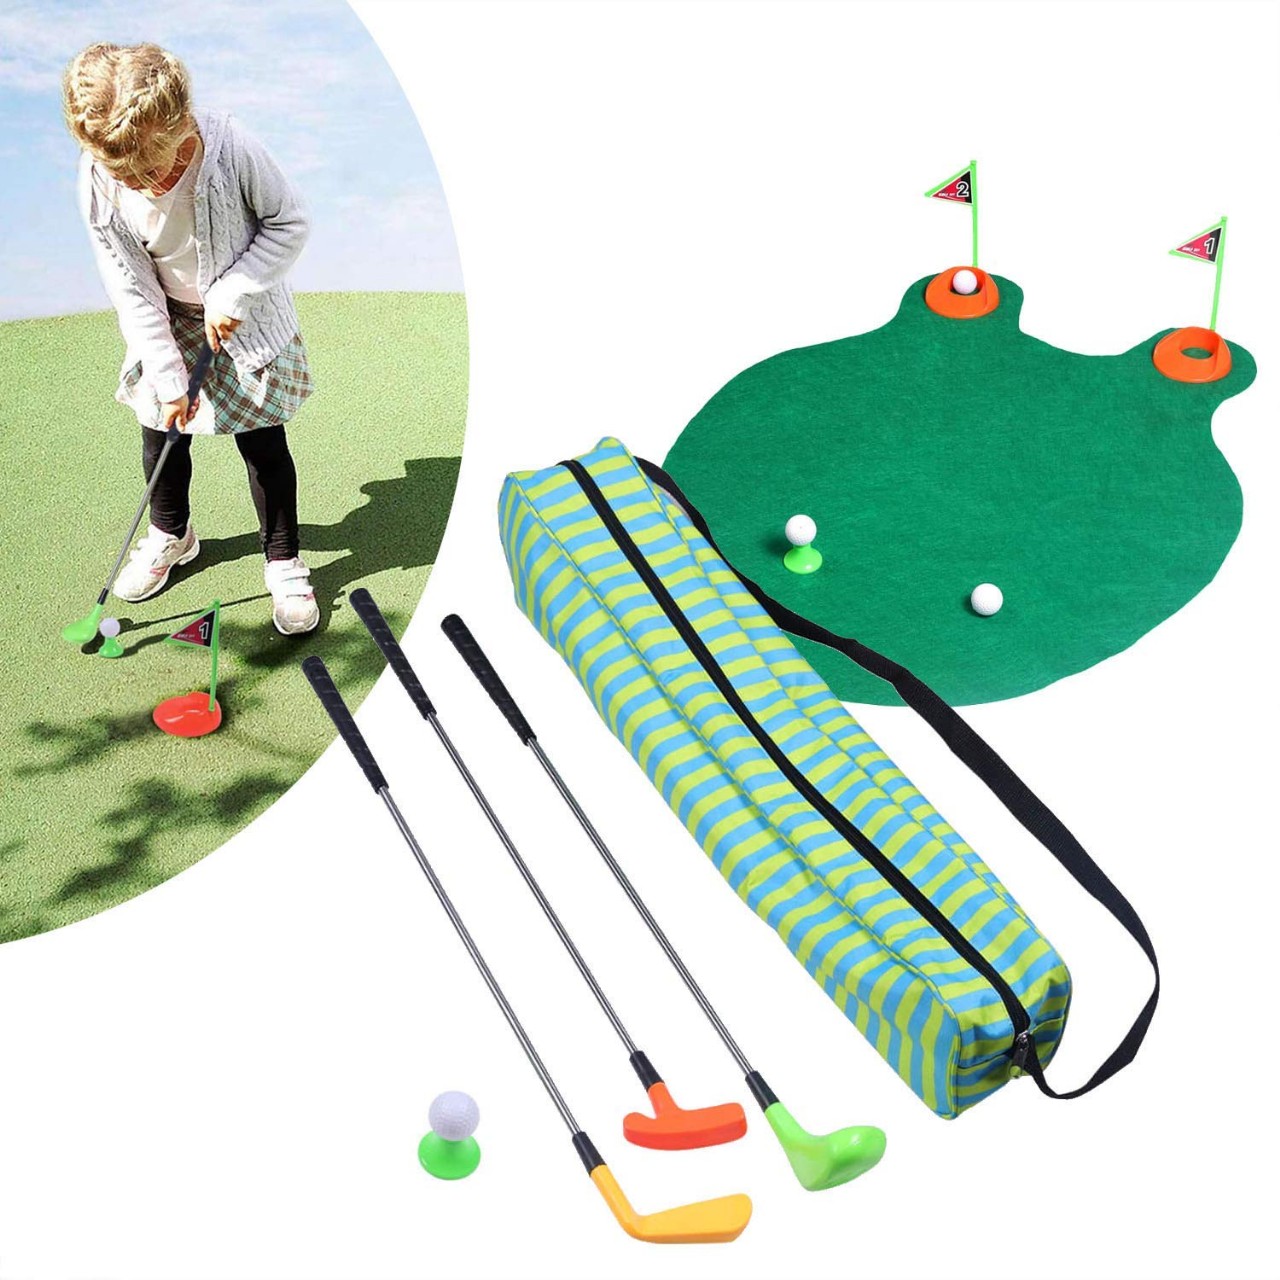 Kids Golf Club Toys - Best Golf Clubs, Putting Green Mat, & Mini Golf Bag Play Set for Toddler & Pr